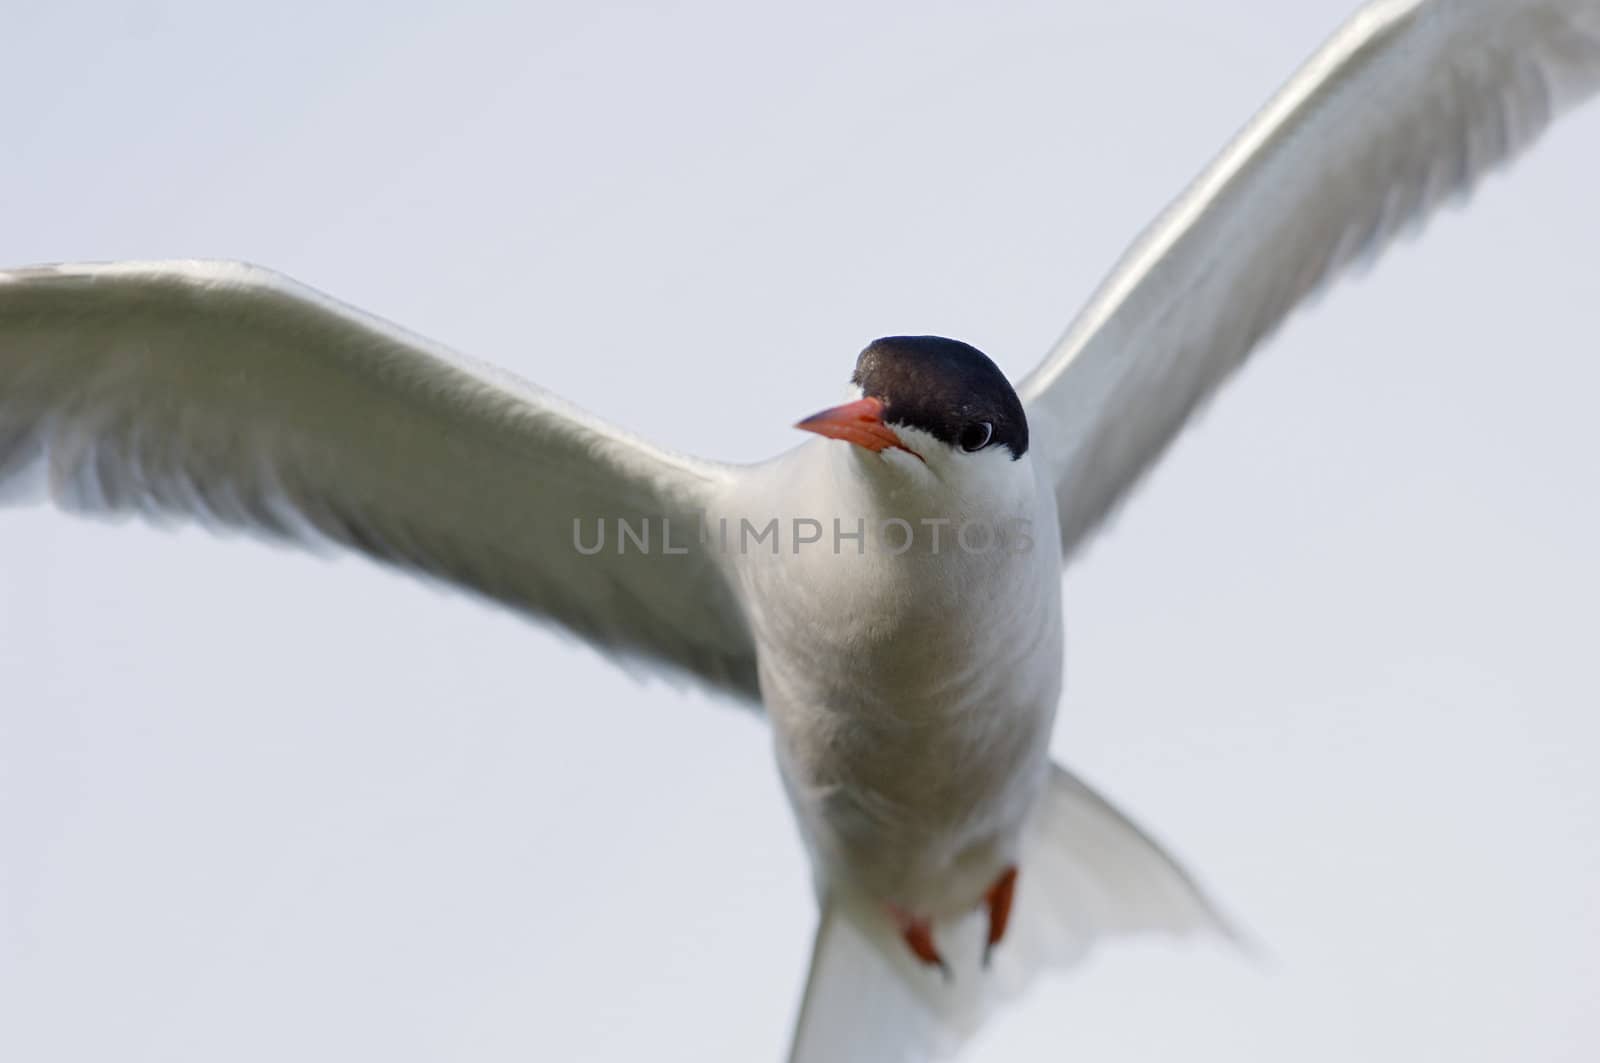 The Common Tern (Sterna hirundo) is a seabird of the tern family Sternidae.